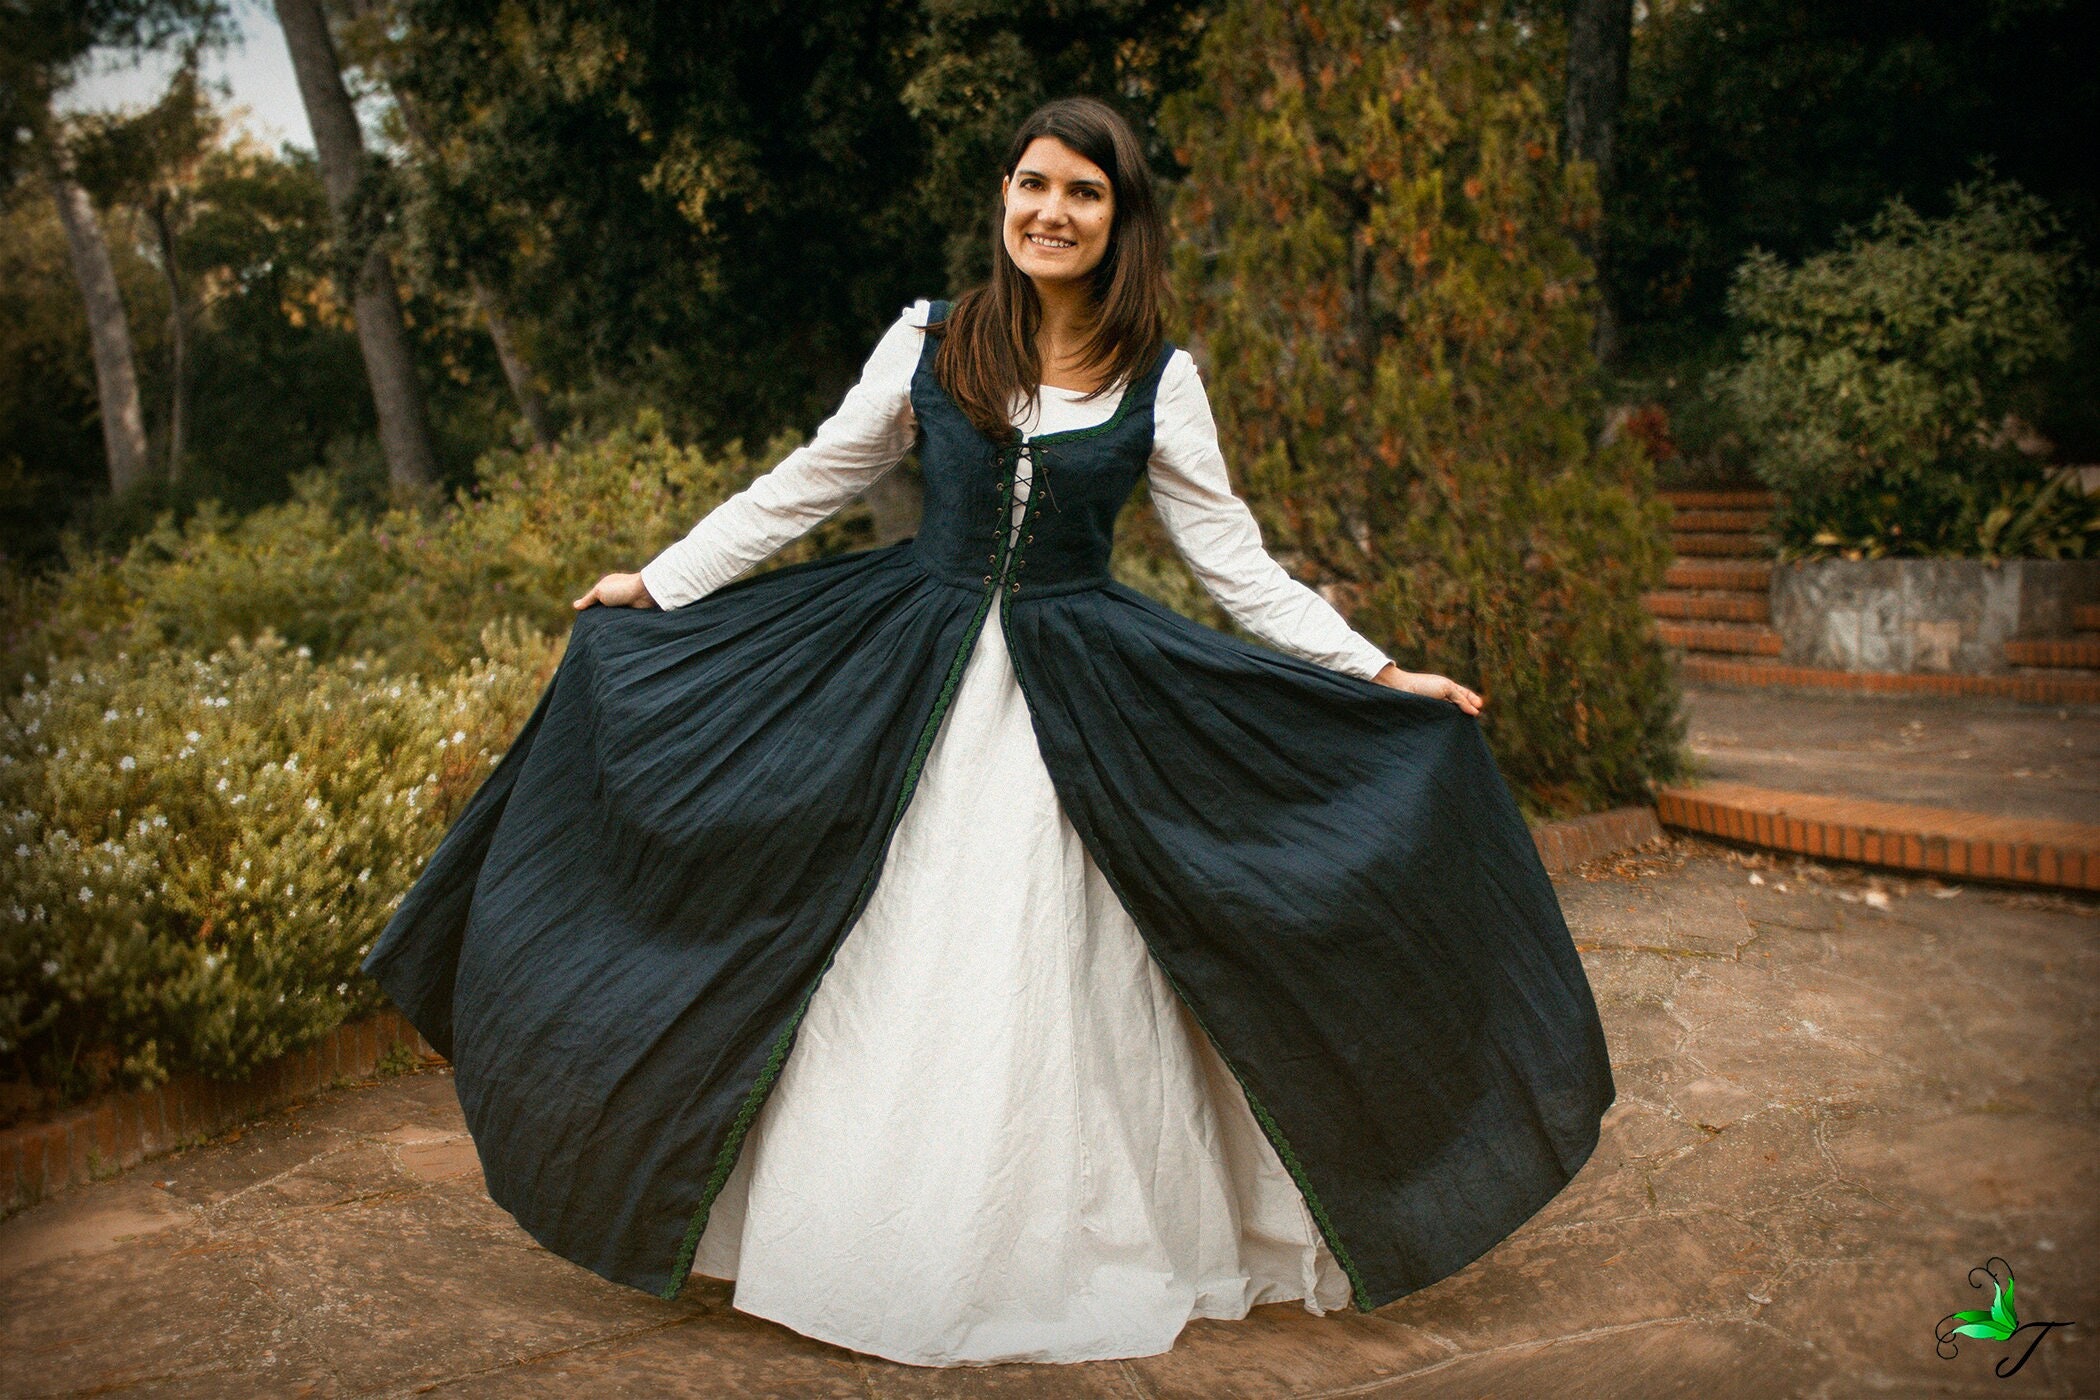 Robe style médiéval « Princesse Perdue ». Disponible en : coton